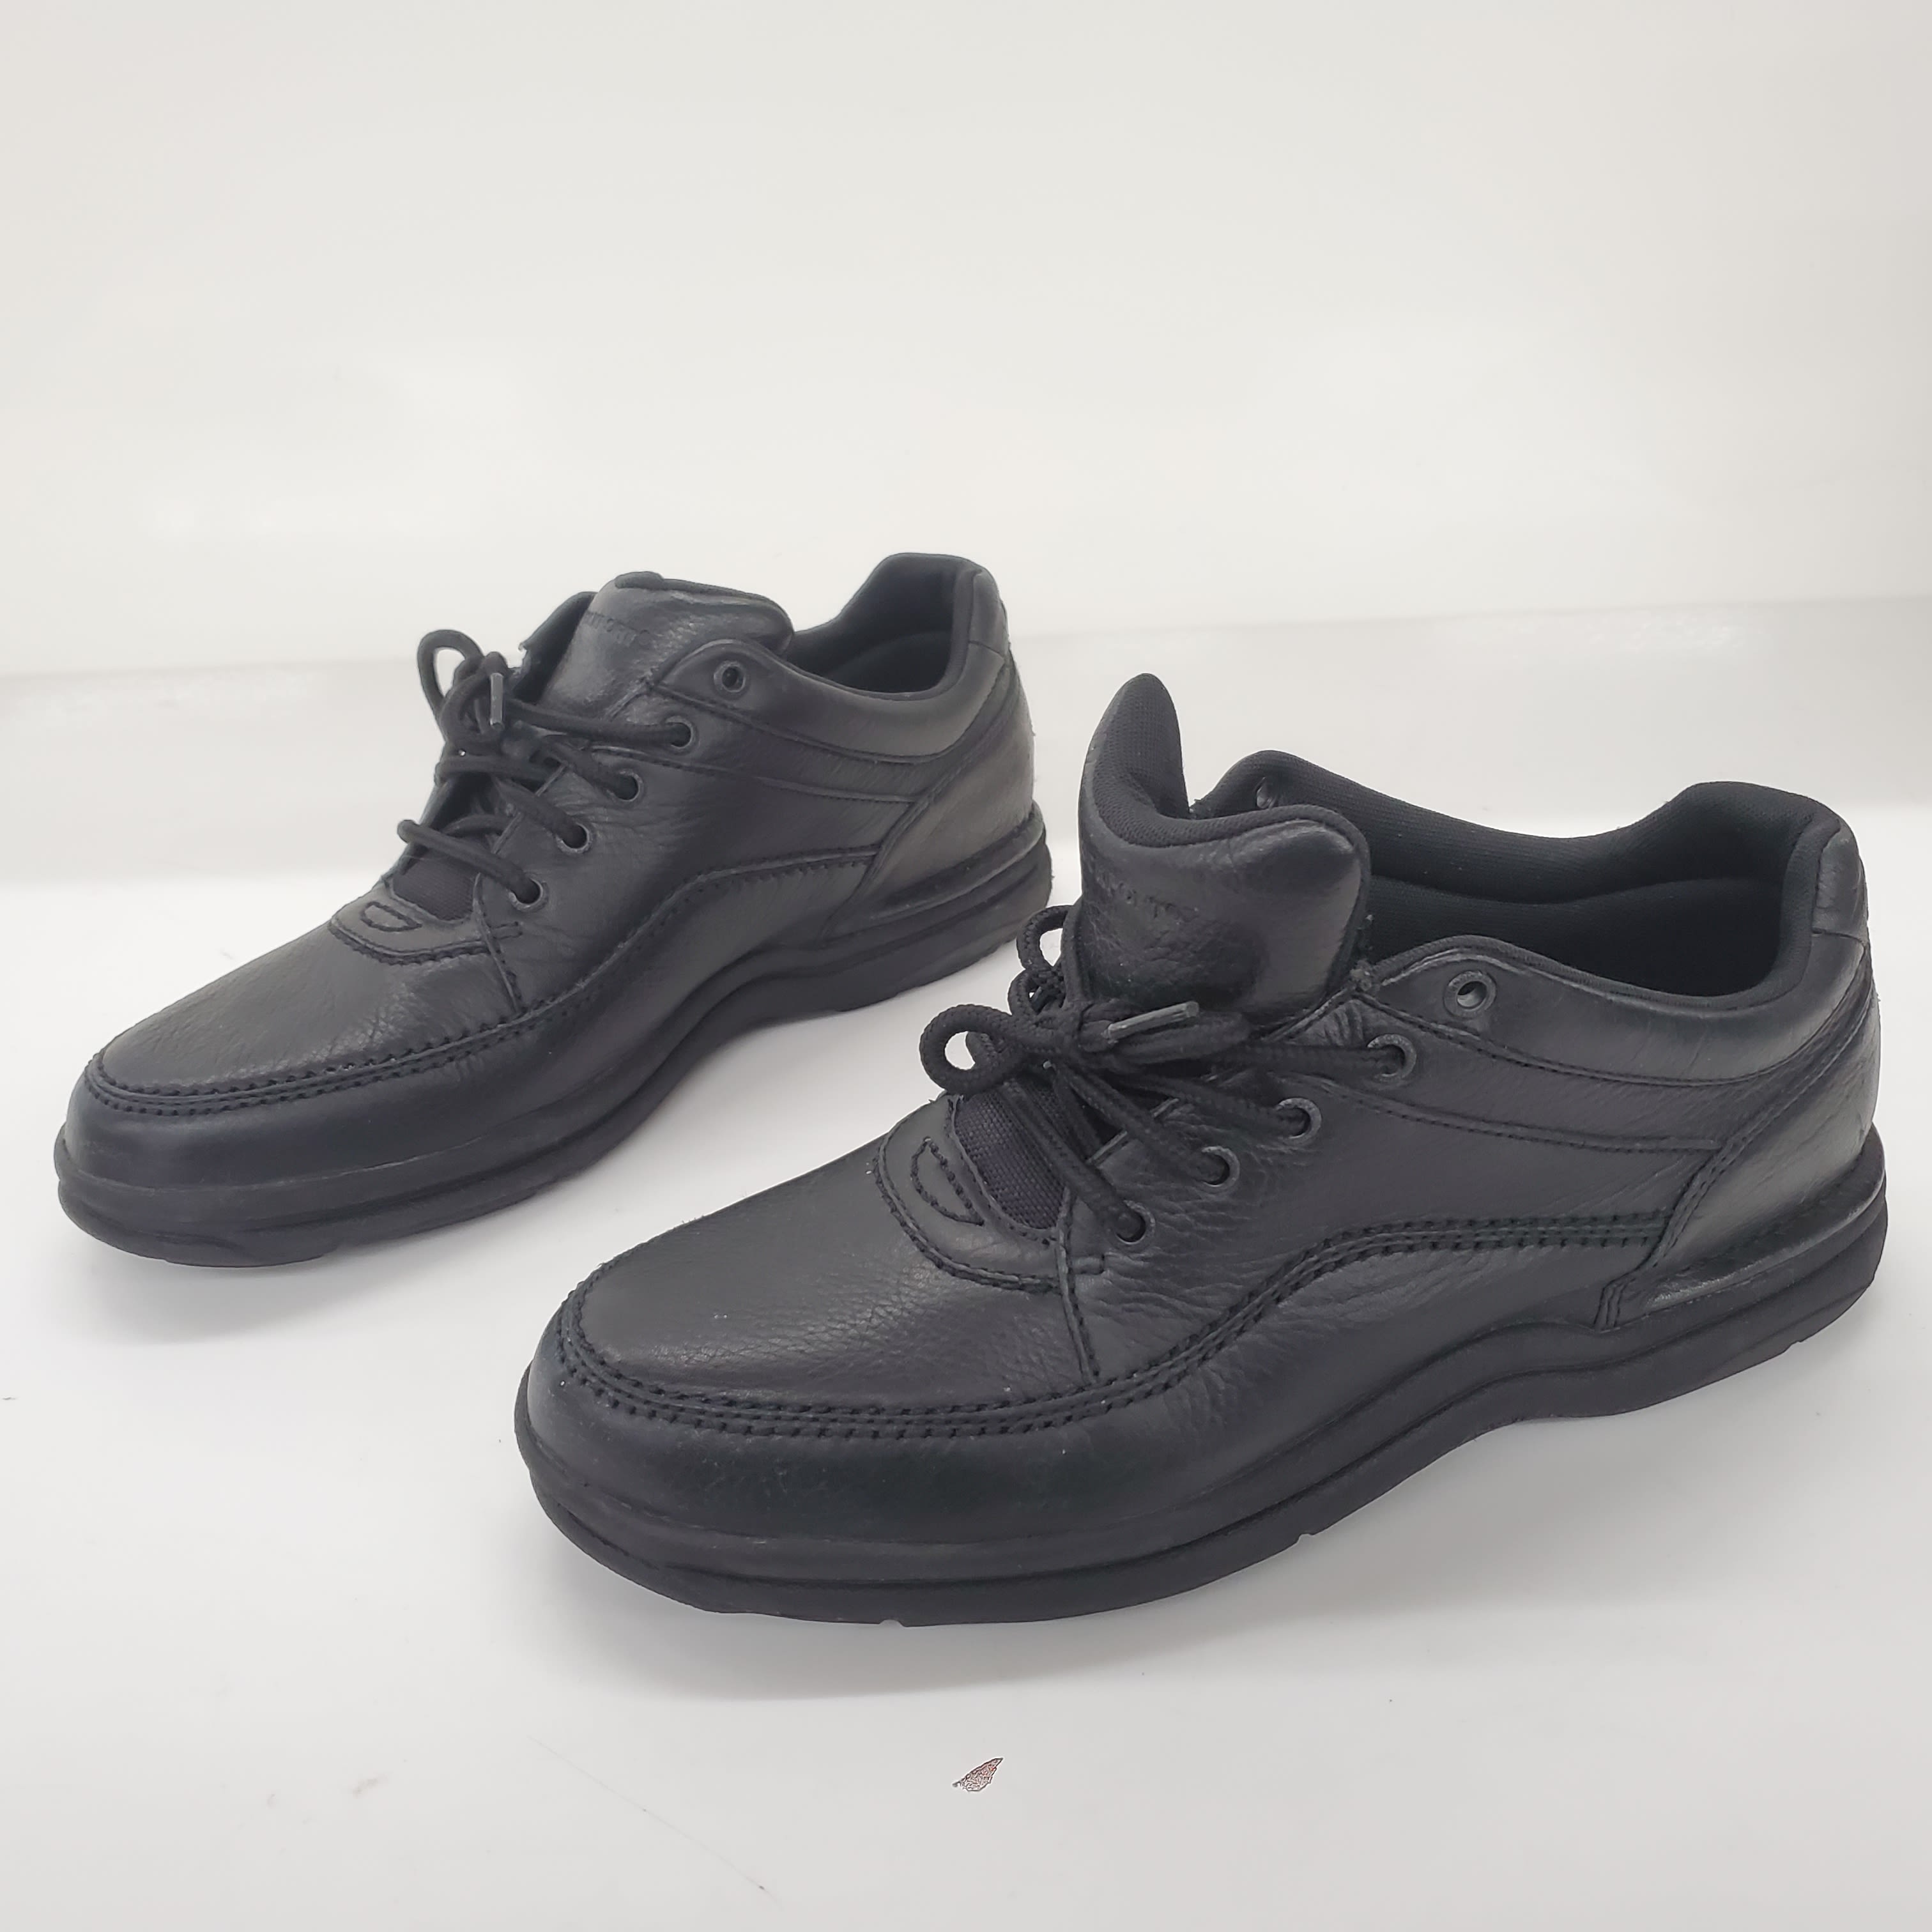 Shoe Goo Black 3.7 Ounce 12 per Case 110212C